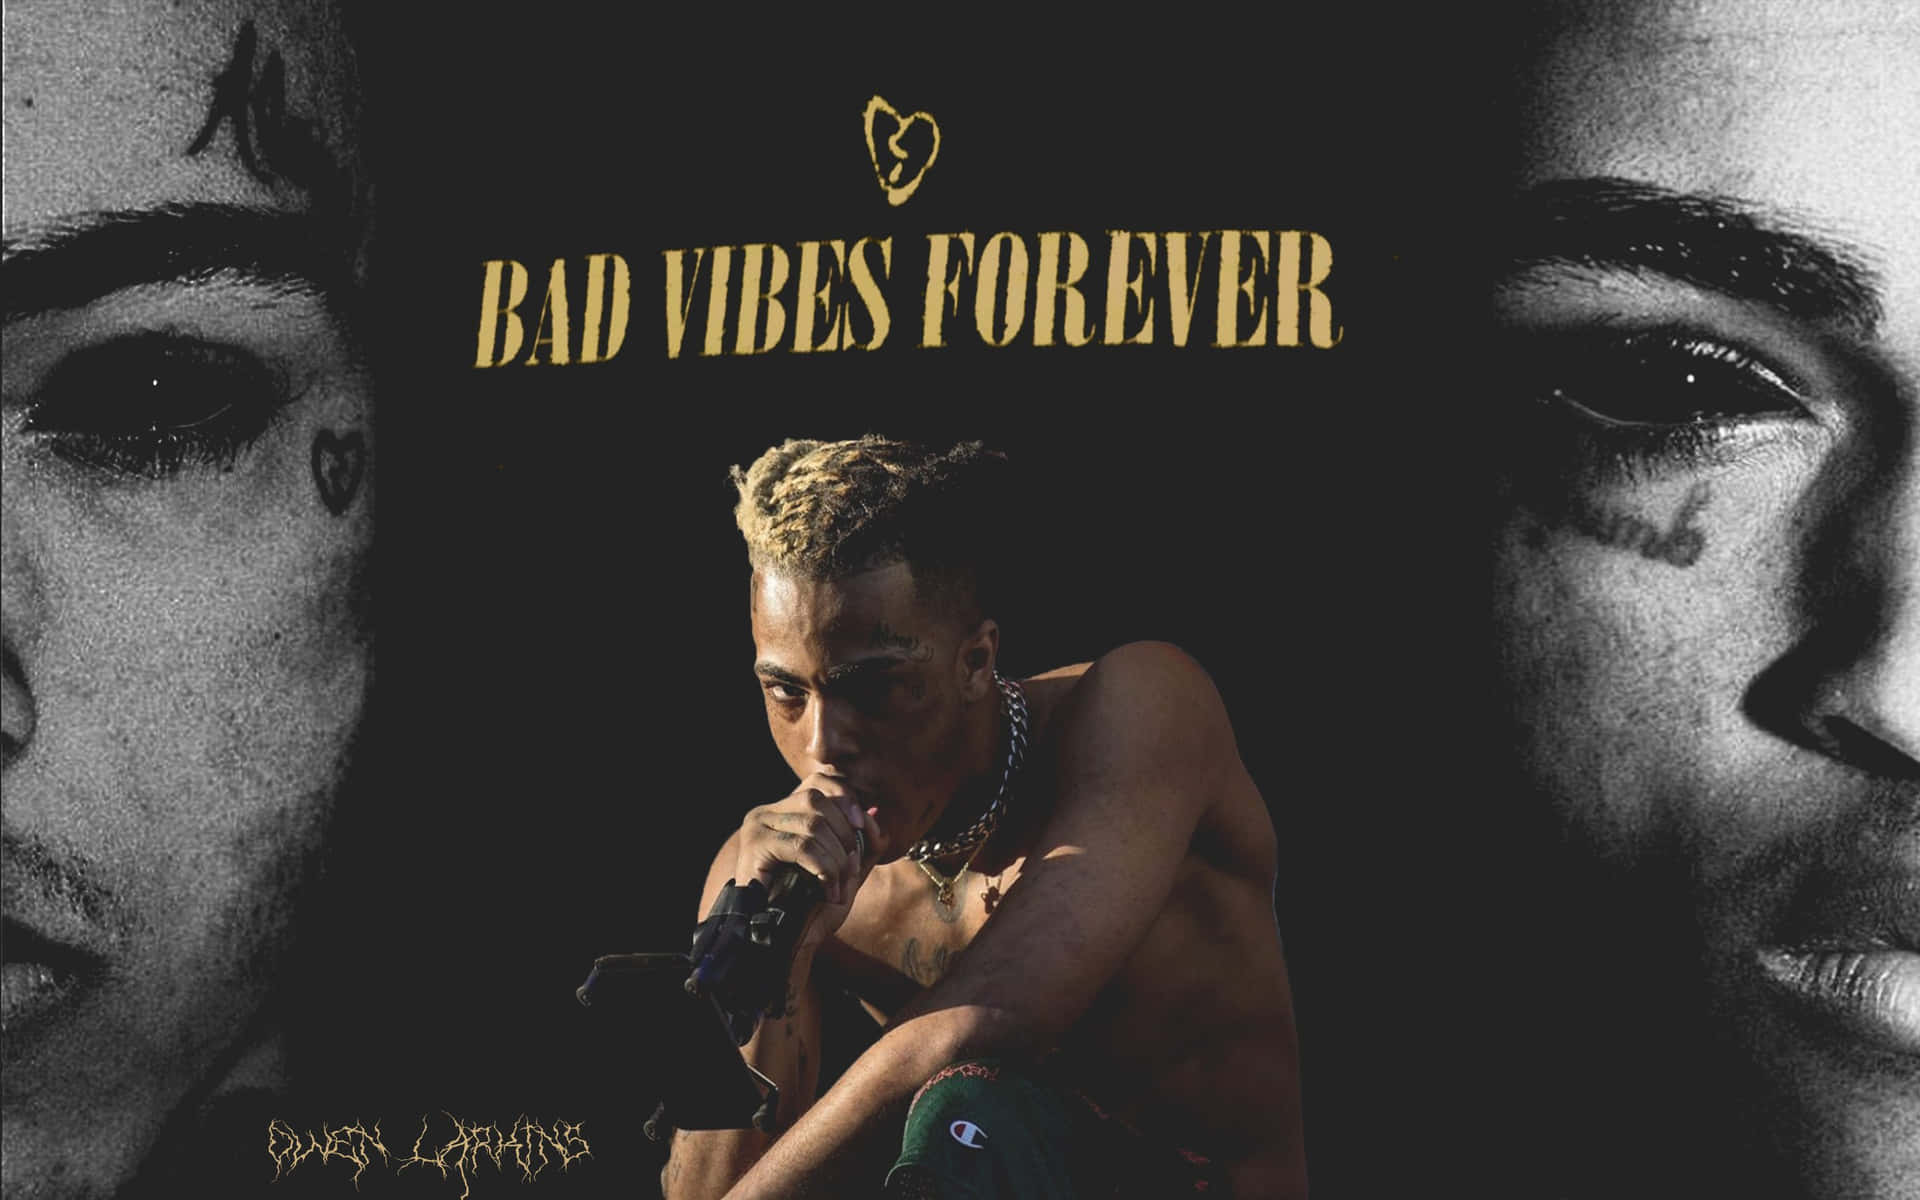 Bad Vibes Forever - Lil Wayne - Ad Wallpaper